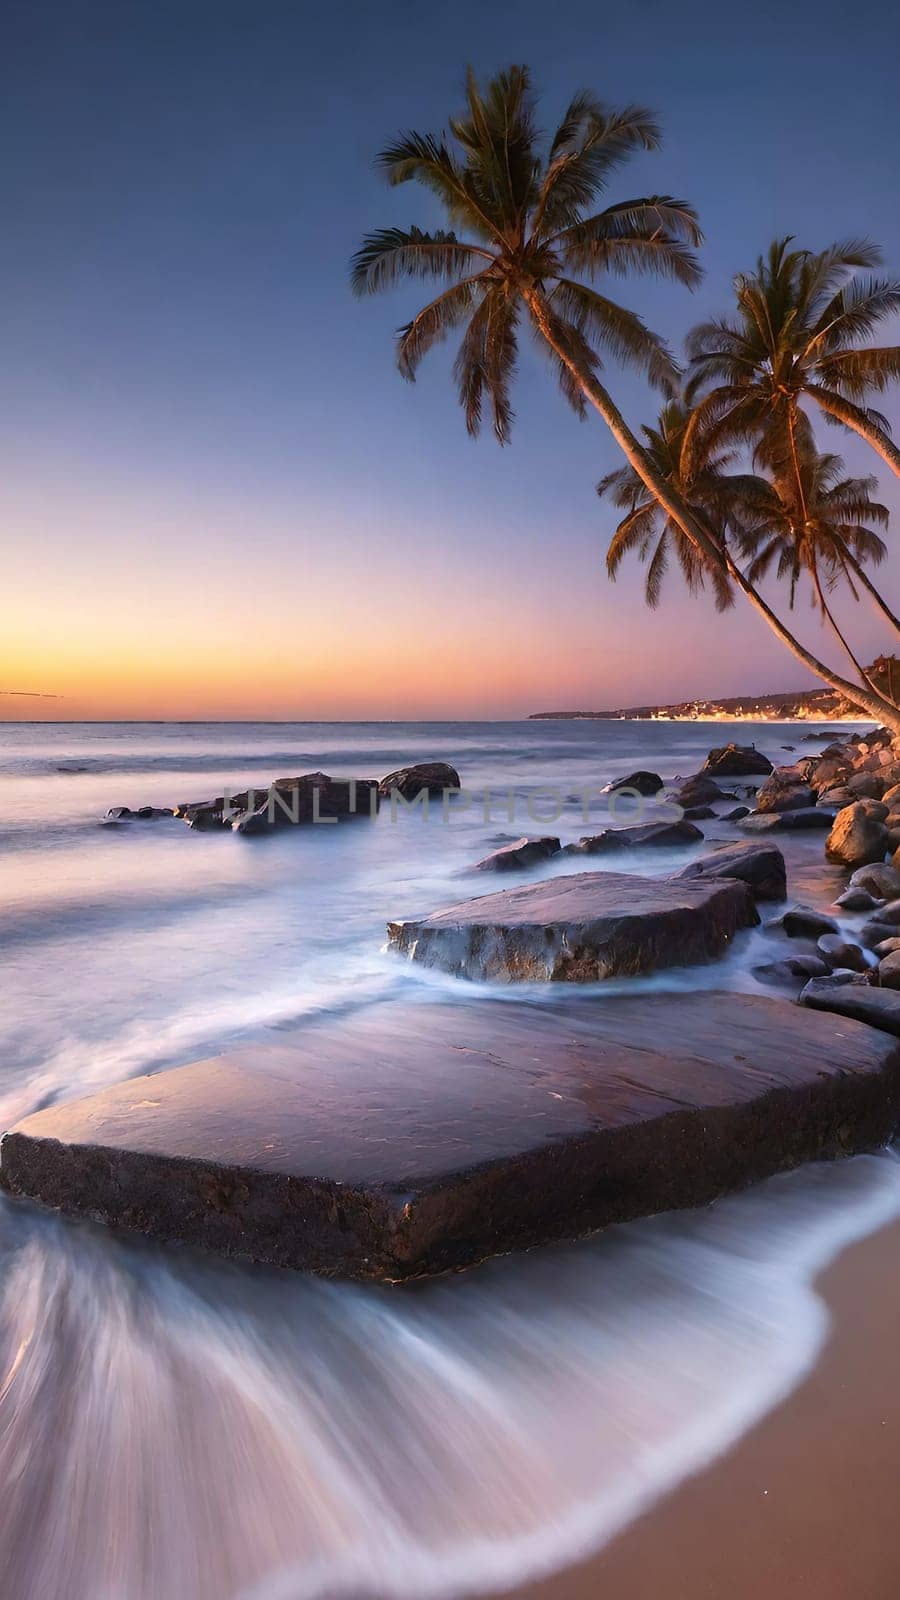 Tropical beach with coconut palm tree at sunset. by yilmazsavaskandag